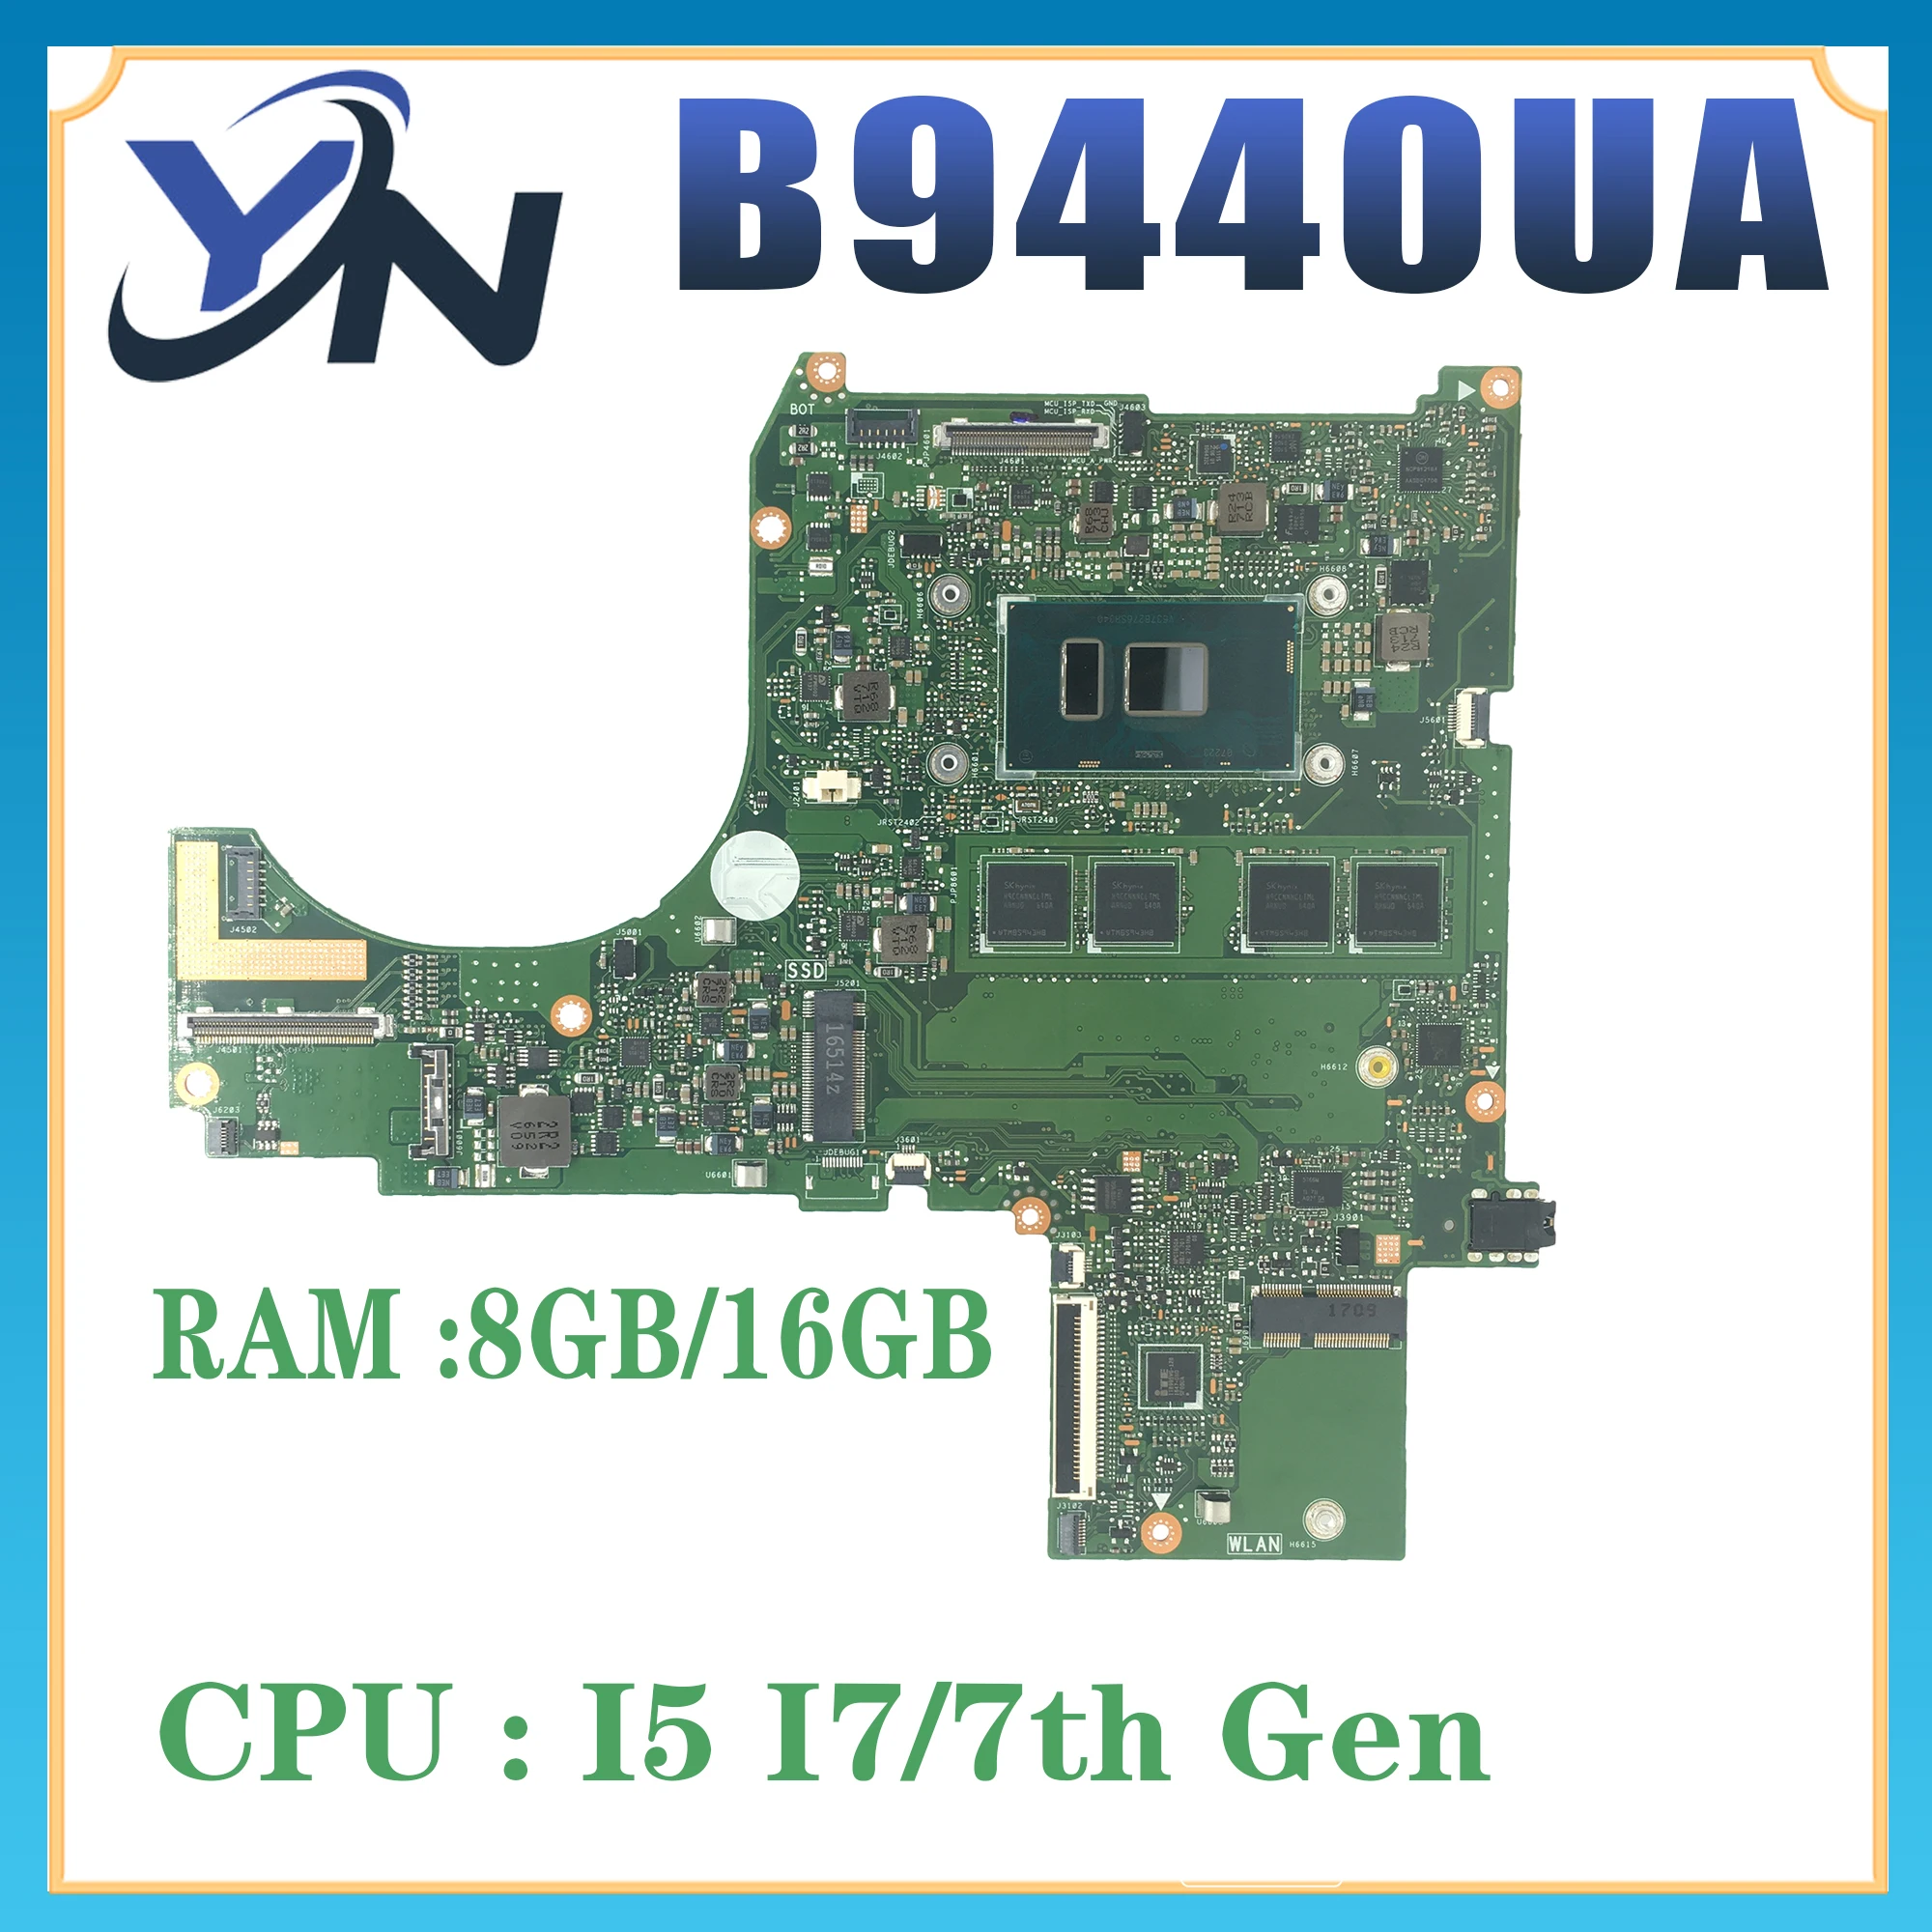 

B9440UA Laotop материнская плата для ASUS ExpertBook B9440 B9440U материнская плата со стандартным процессором I7-7500U 8 ГБ 16 ГБ ОЗУ 100% ТЕСТ ОК